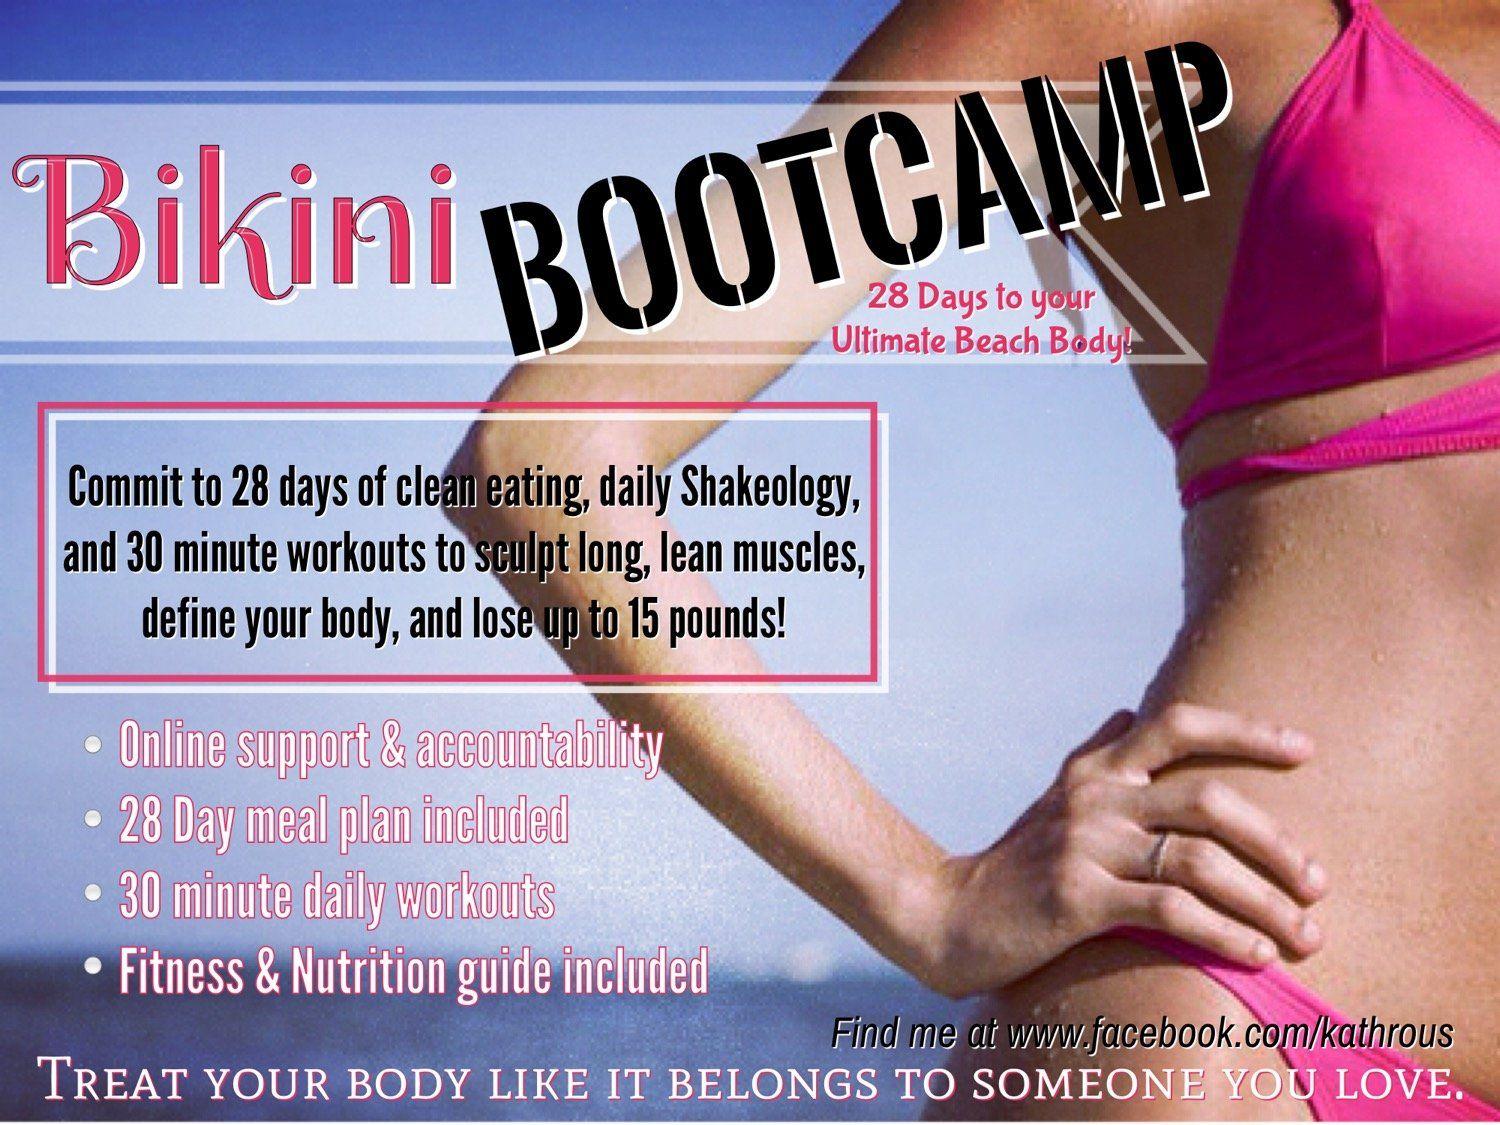 Bikini boot camp review